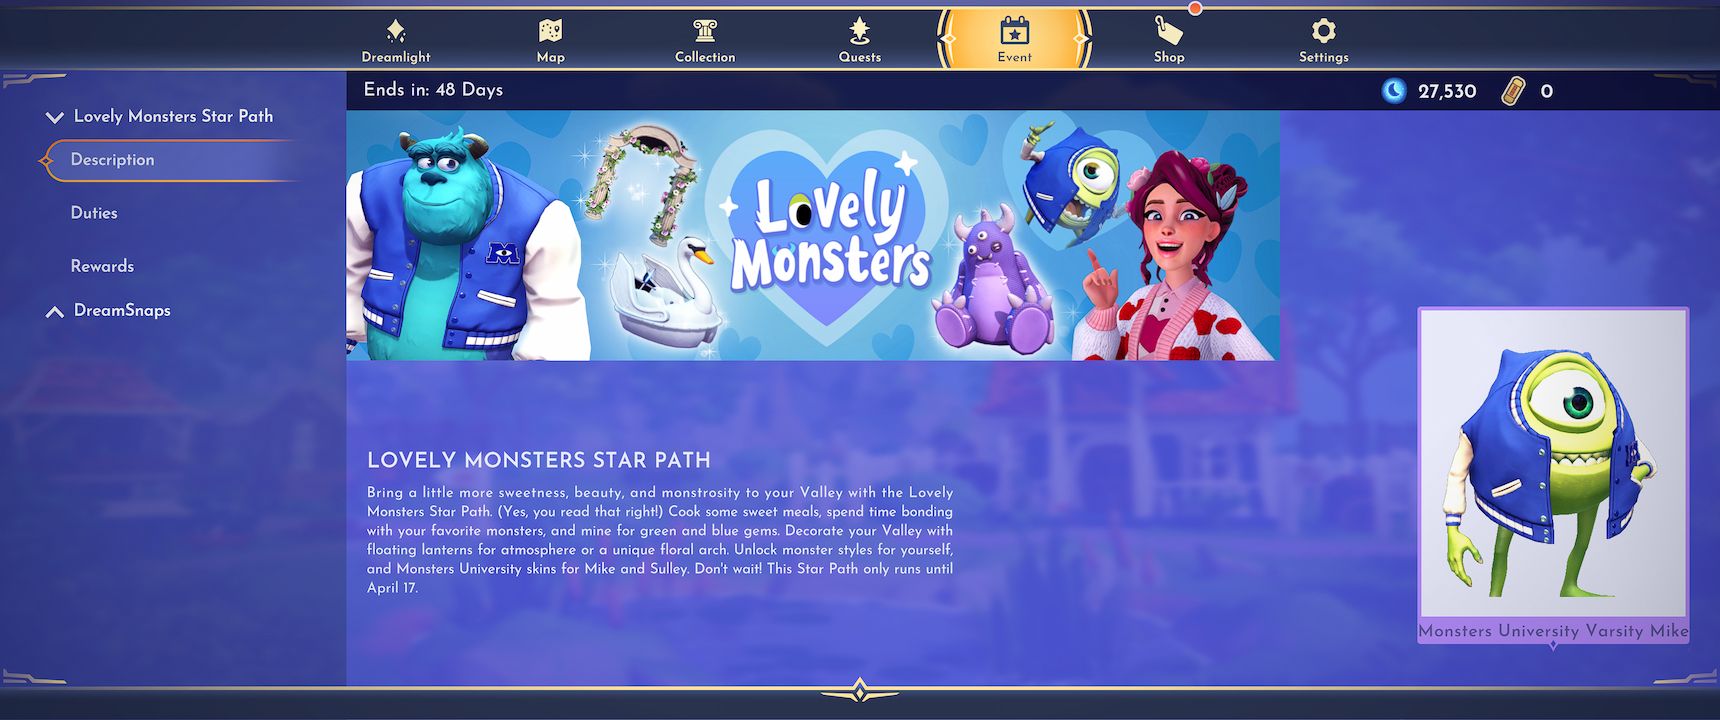 Lovely Monsters Star Path in Disney Dreamlight Valley